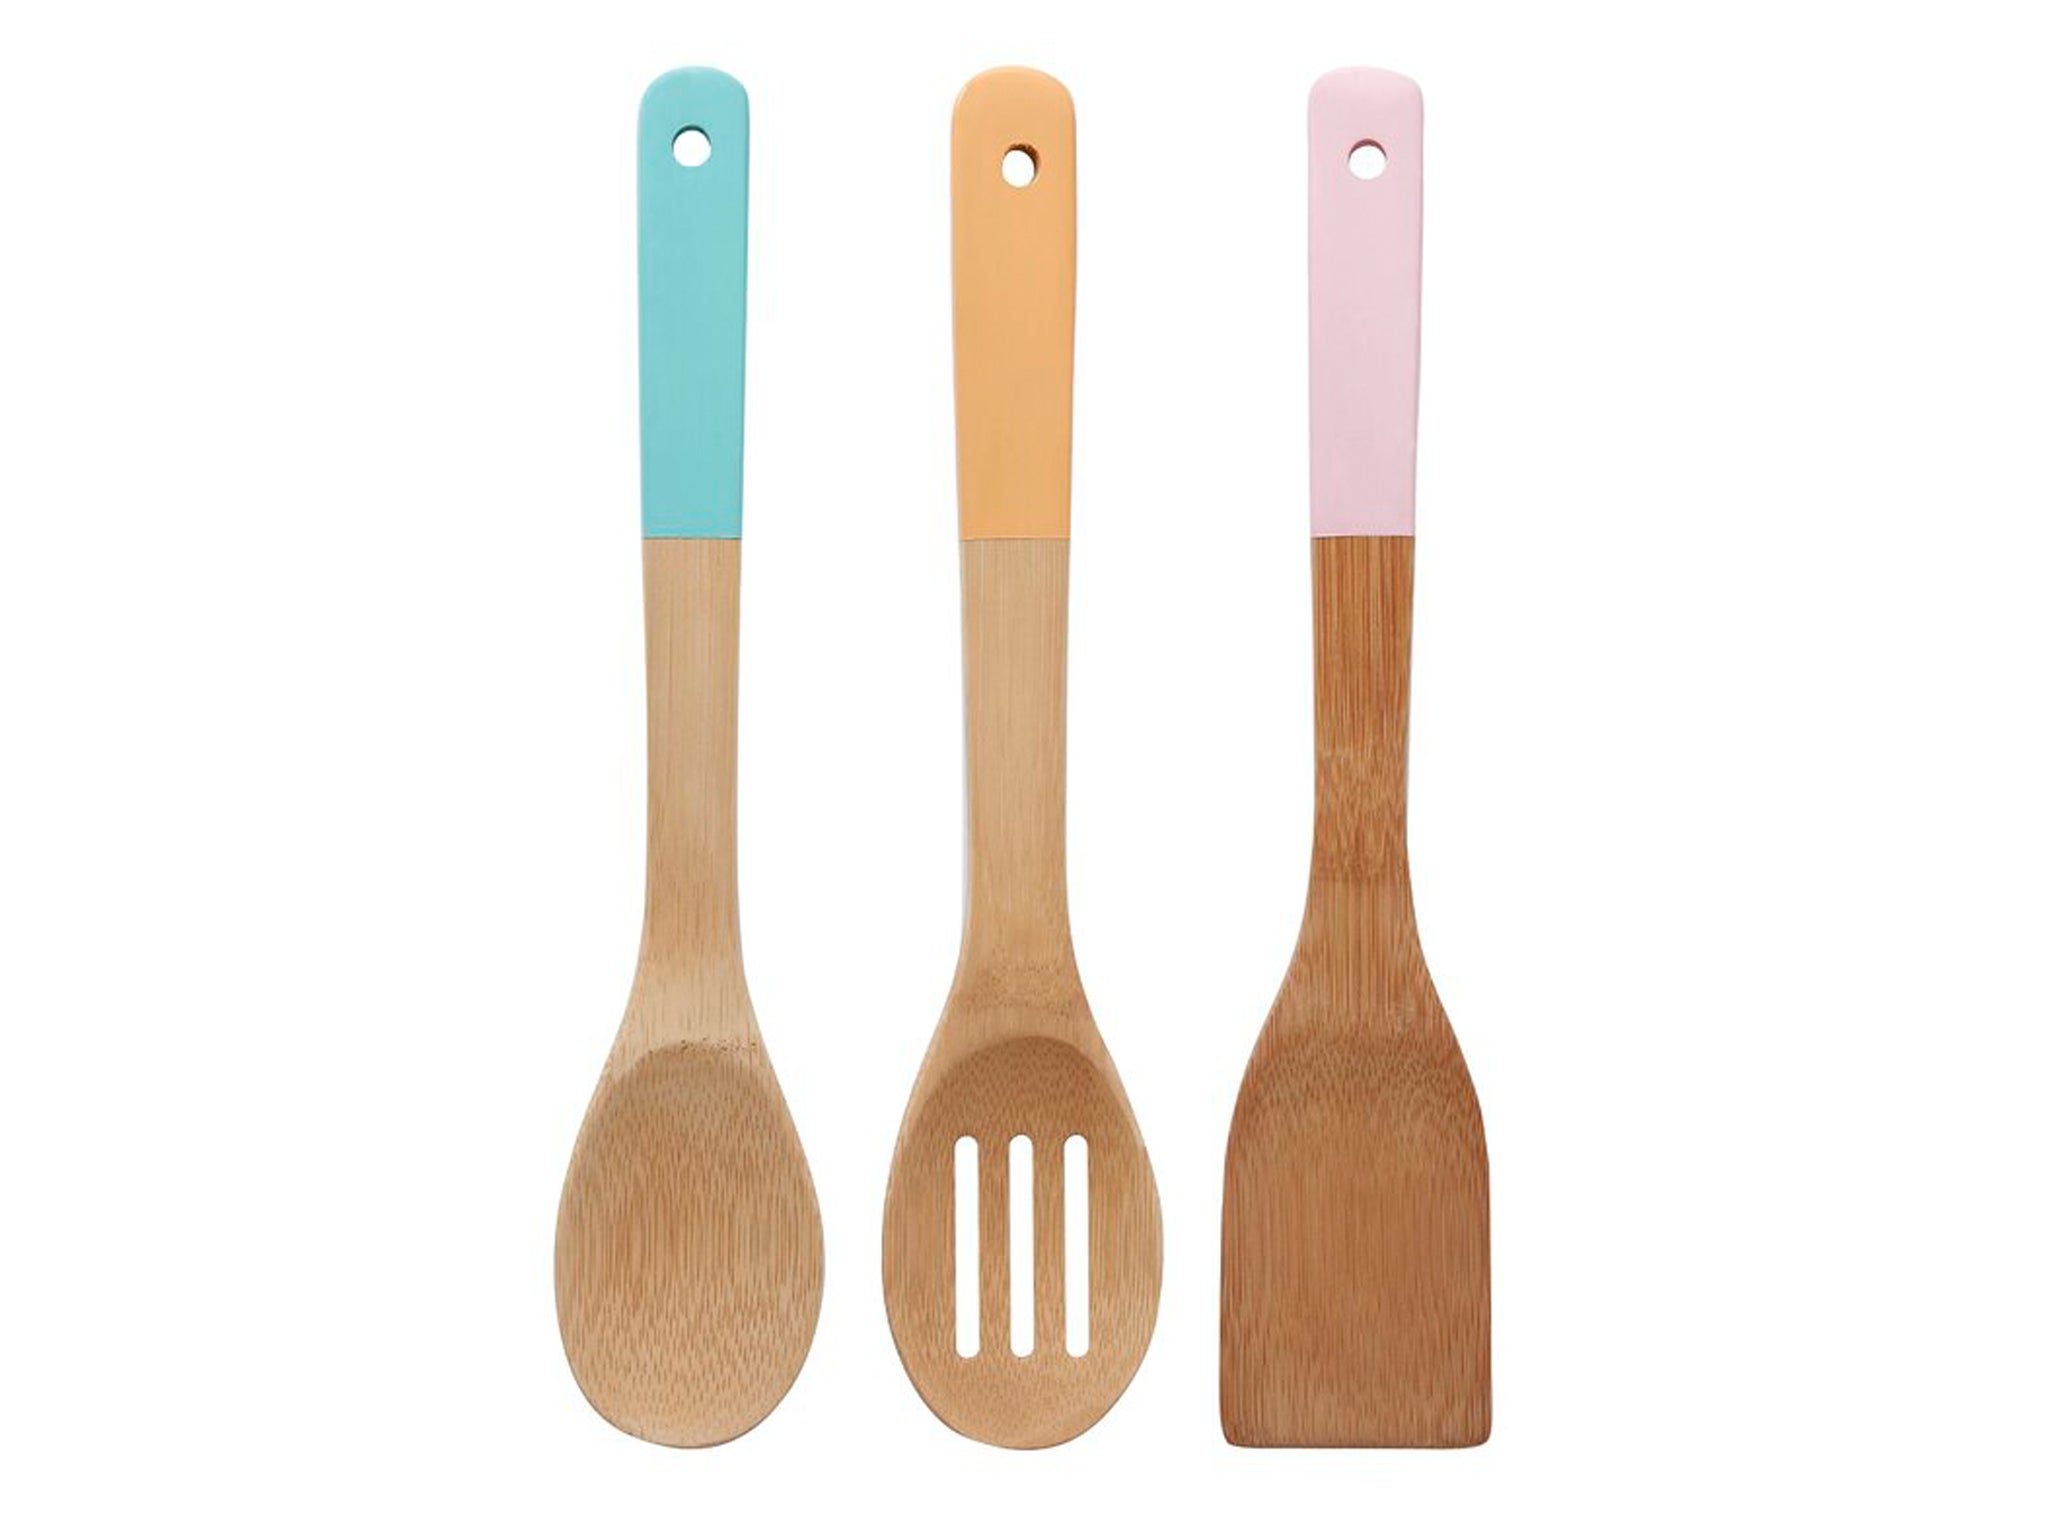 Symple Stuff bamboo kitchen utensil set.jpg